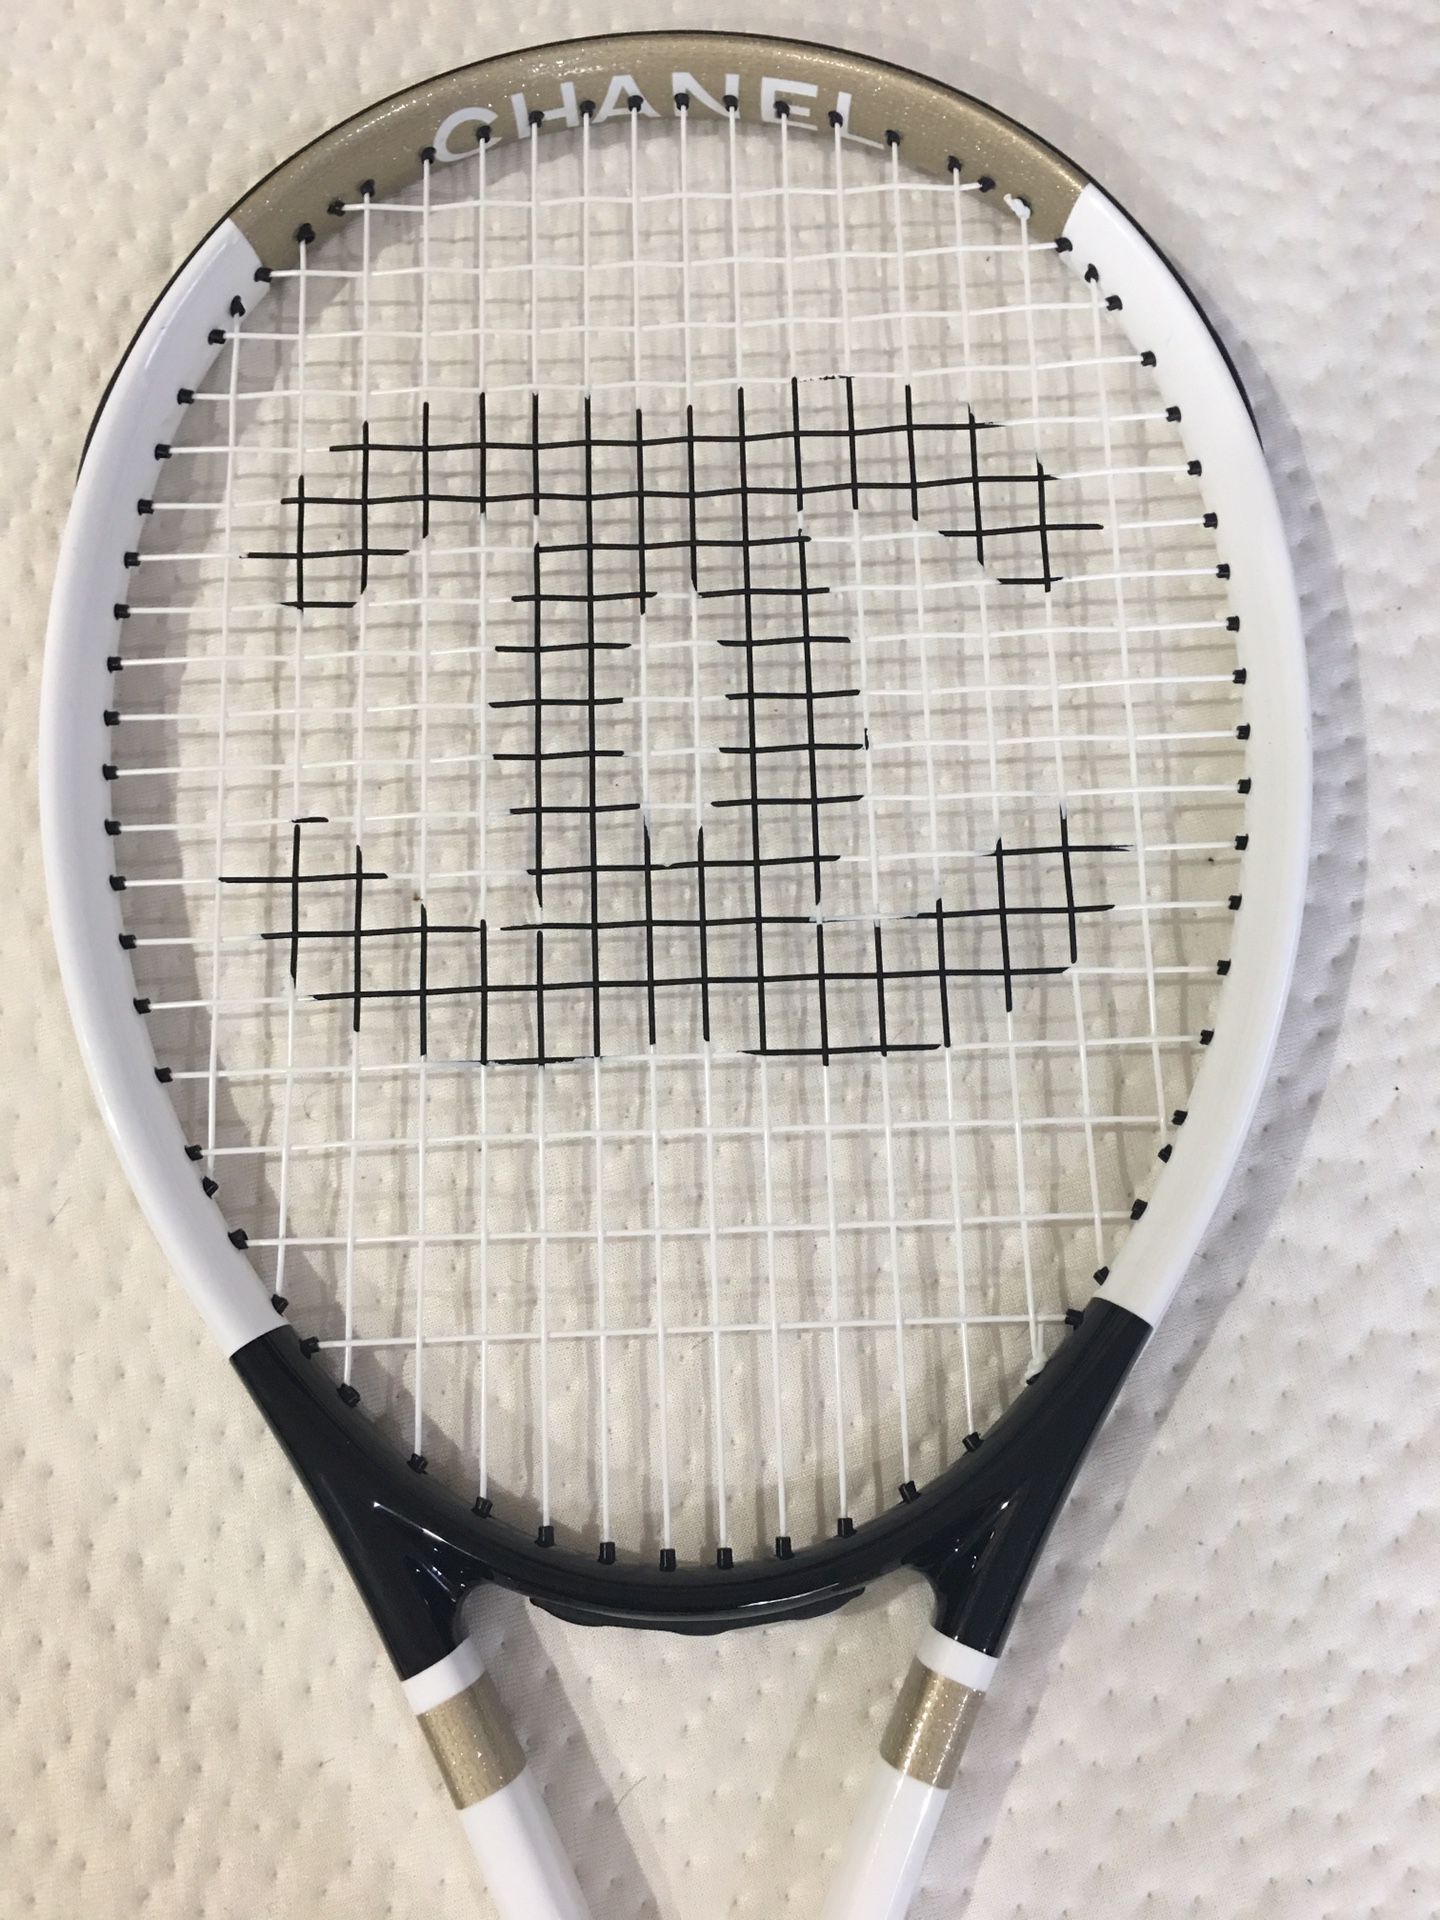 Chanel Tennis Racket Set at 1stDibs